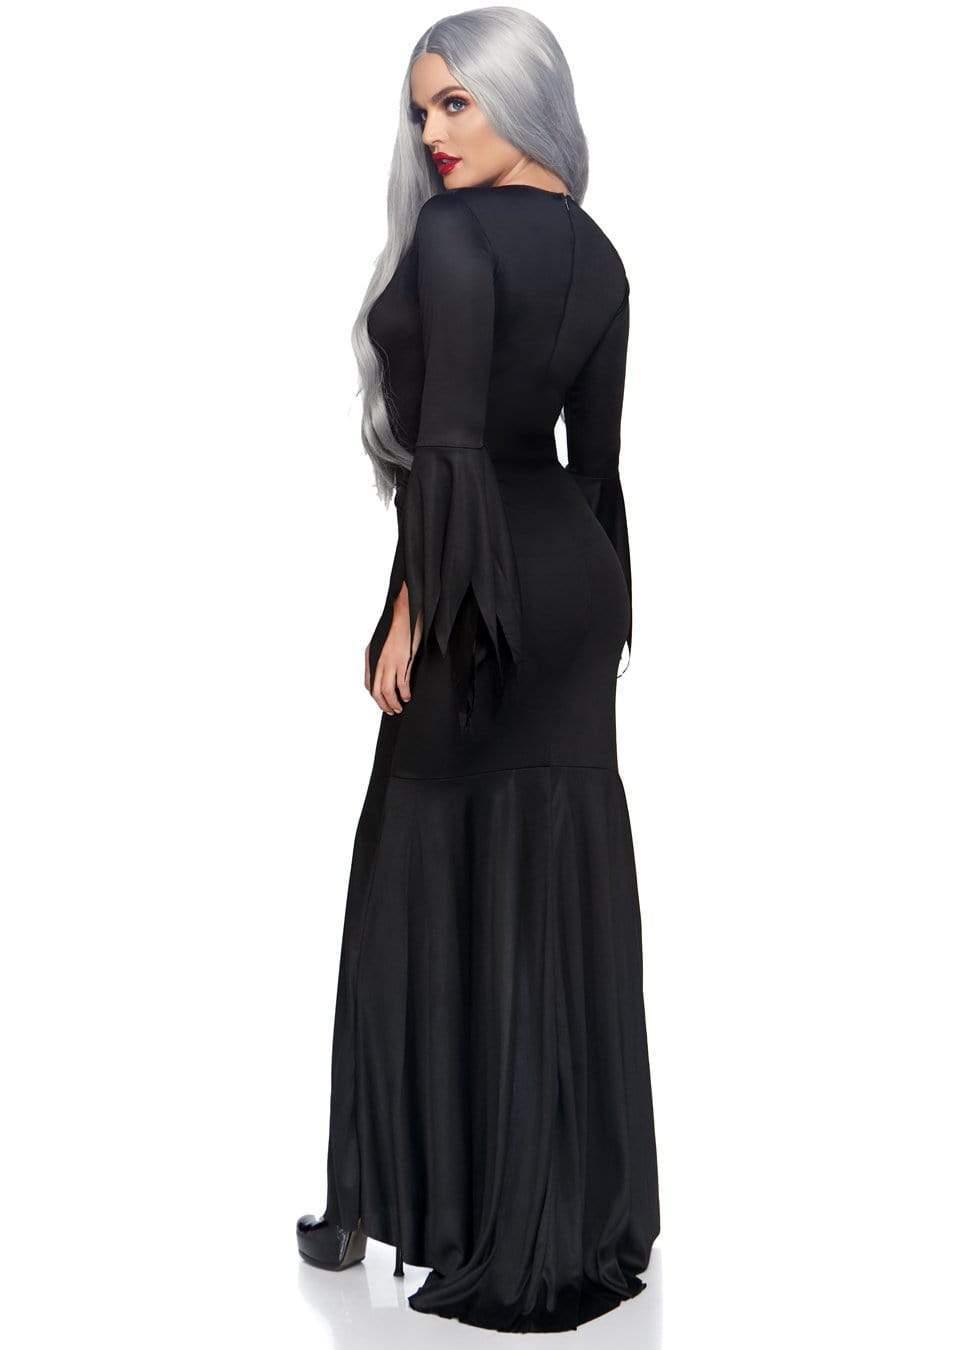 Gothic Black Floor Length Dress with High Side Slit